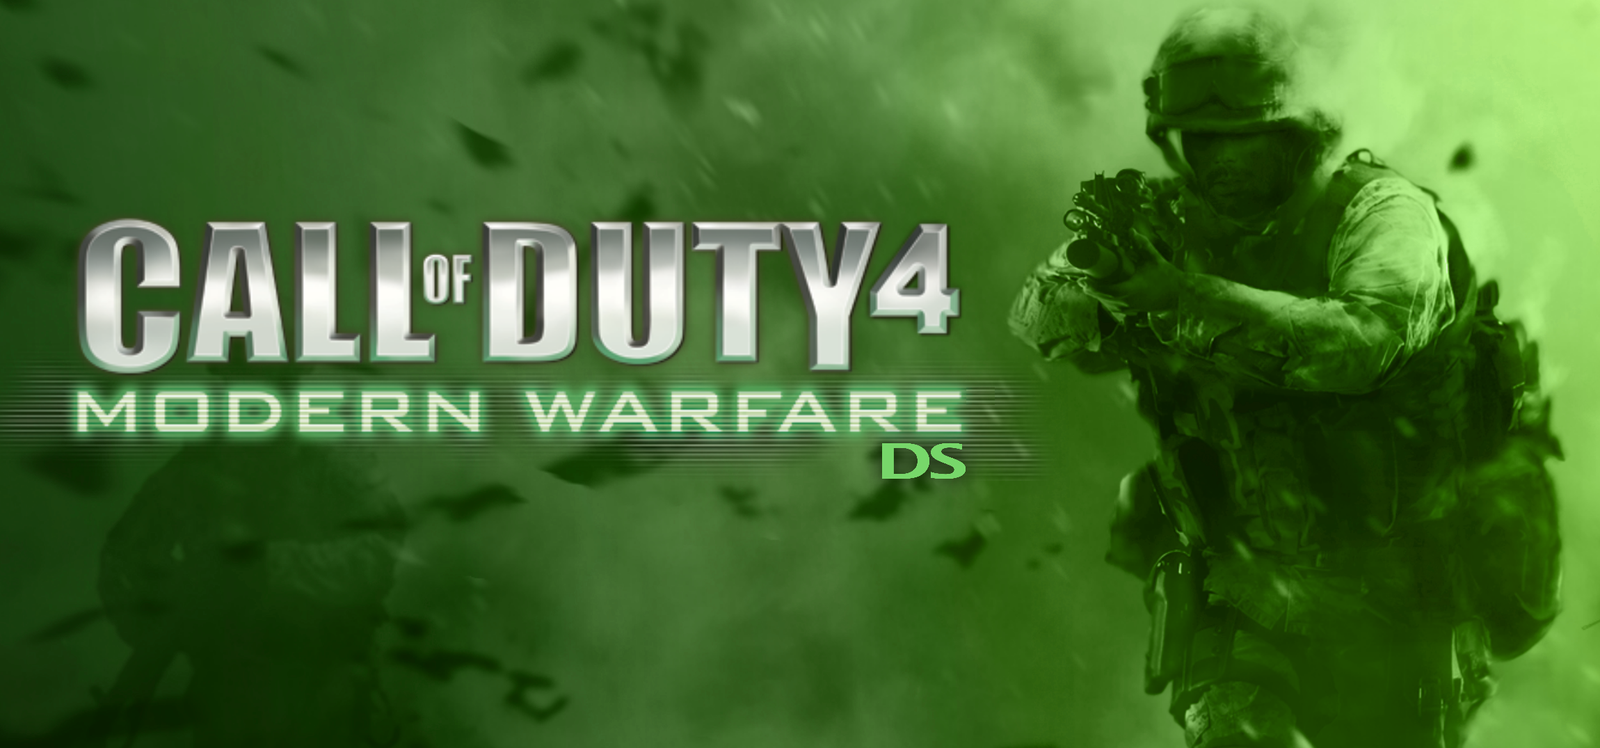 Call of duty modern warfare nintendo ds. Call of Duty 4 Nintendo DS. Call of Duty 4 Modern Warfare. Call of Duty 4 Modern Warfare обложка. Call of Duty Modern Warfare DS.